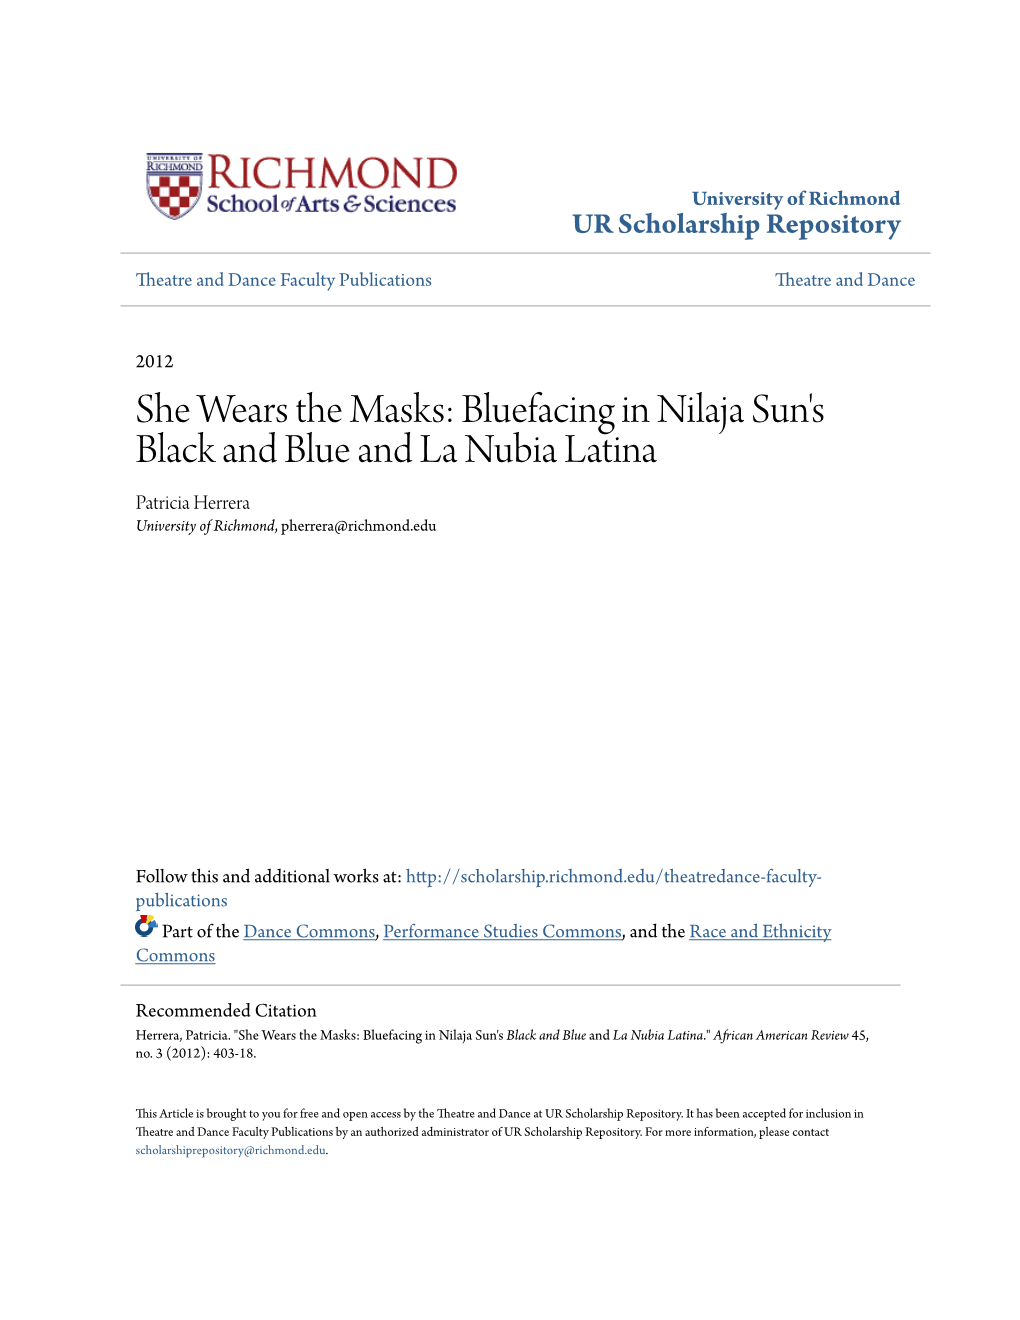 Bluefacing in Nilaja Sun's Black and Blue and La Nubia Latina Patricia Herrera University of Richmond, Pherrera@Richmond.Edu